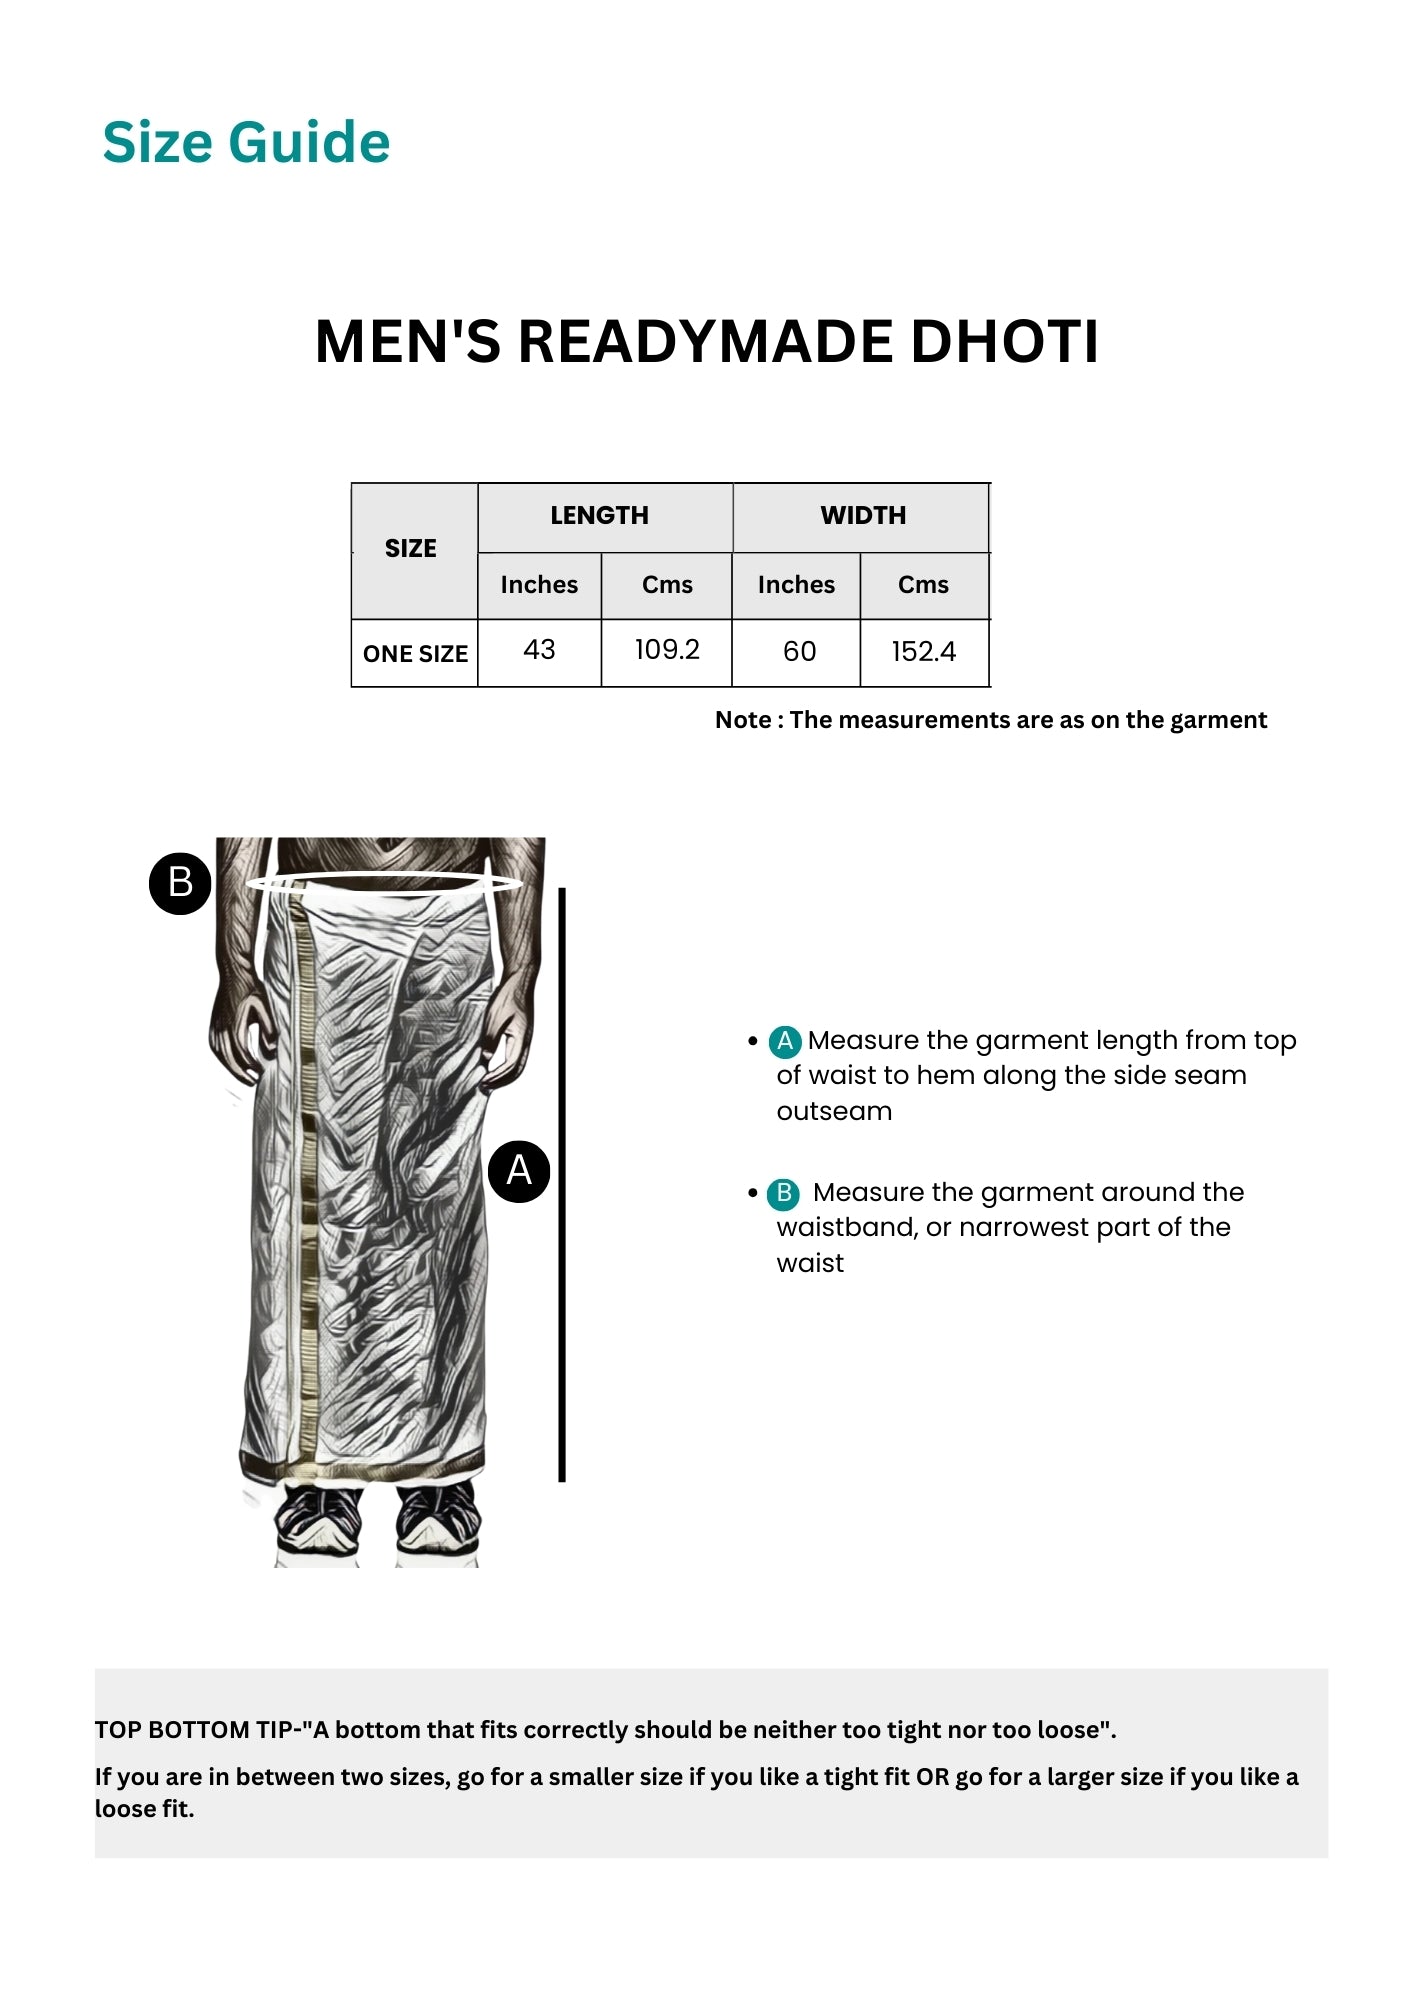 Men Readymade Dhoti size guide